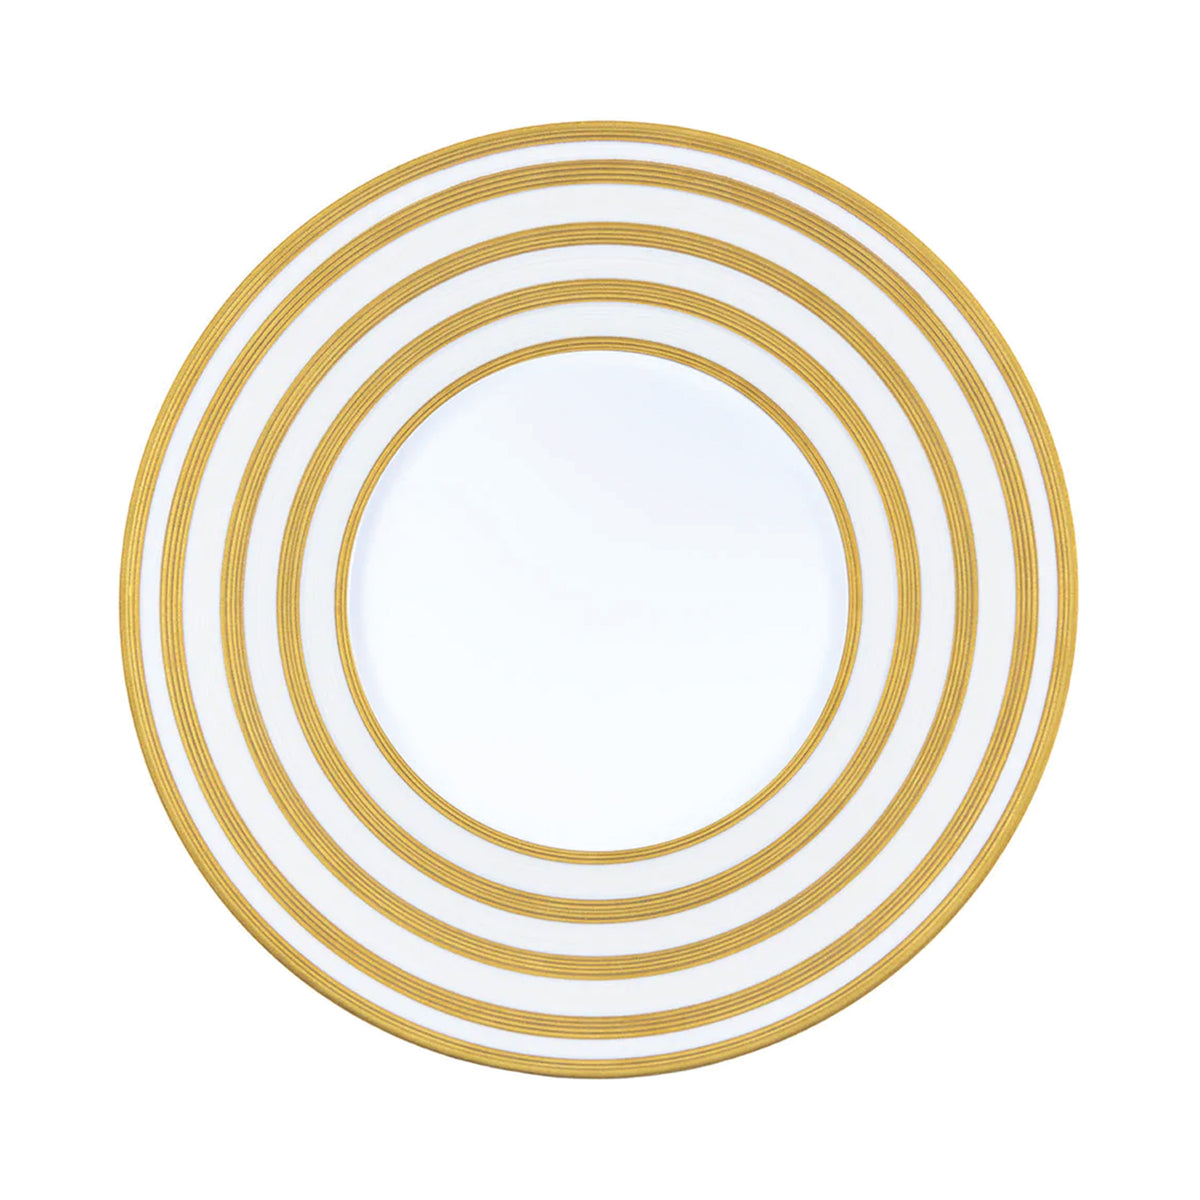 HEMISPHERE Gold stripes - 29 cm plate